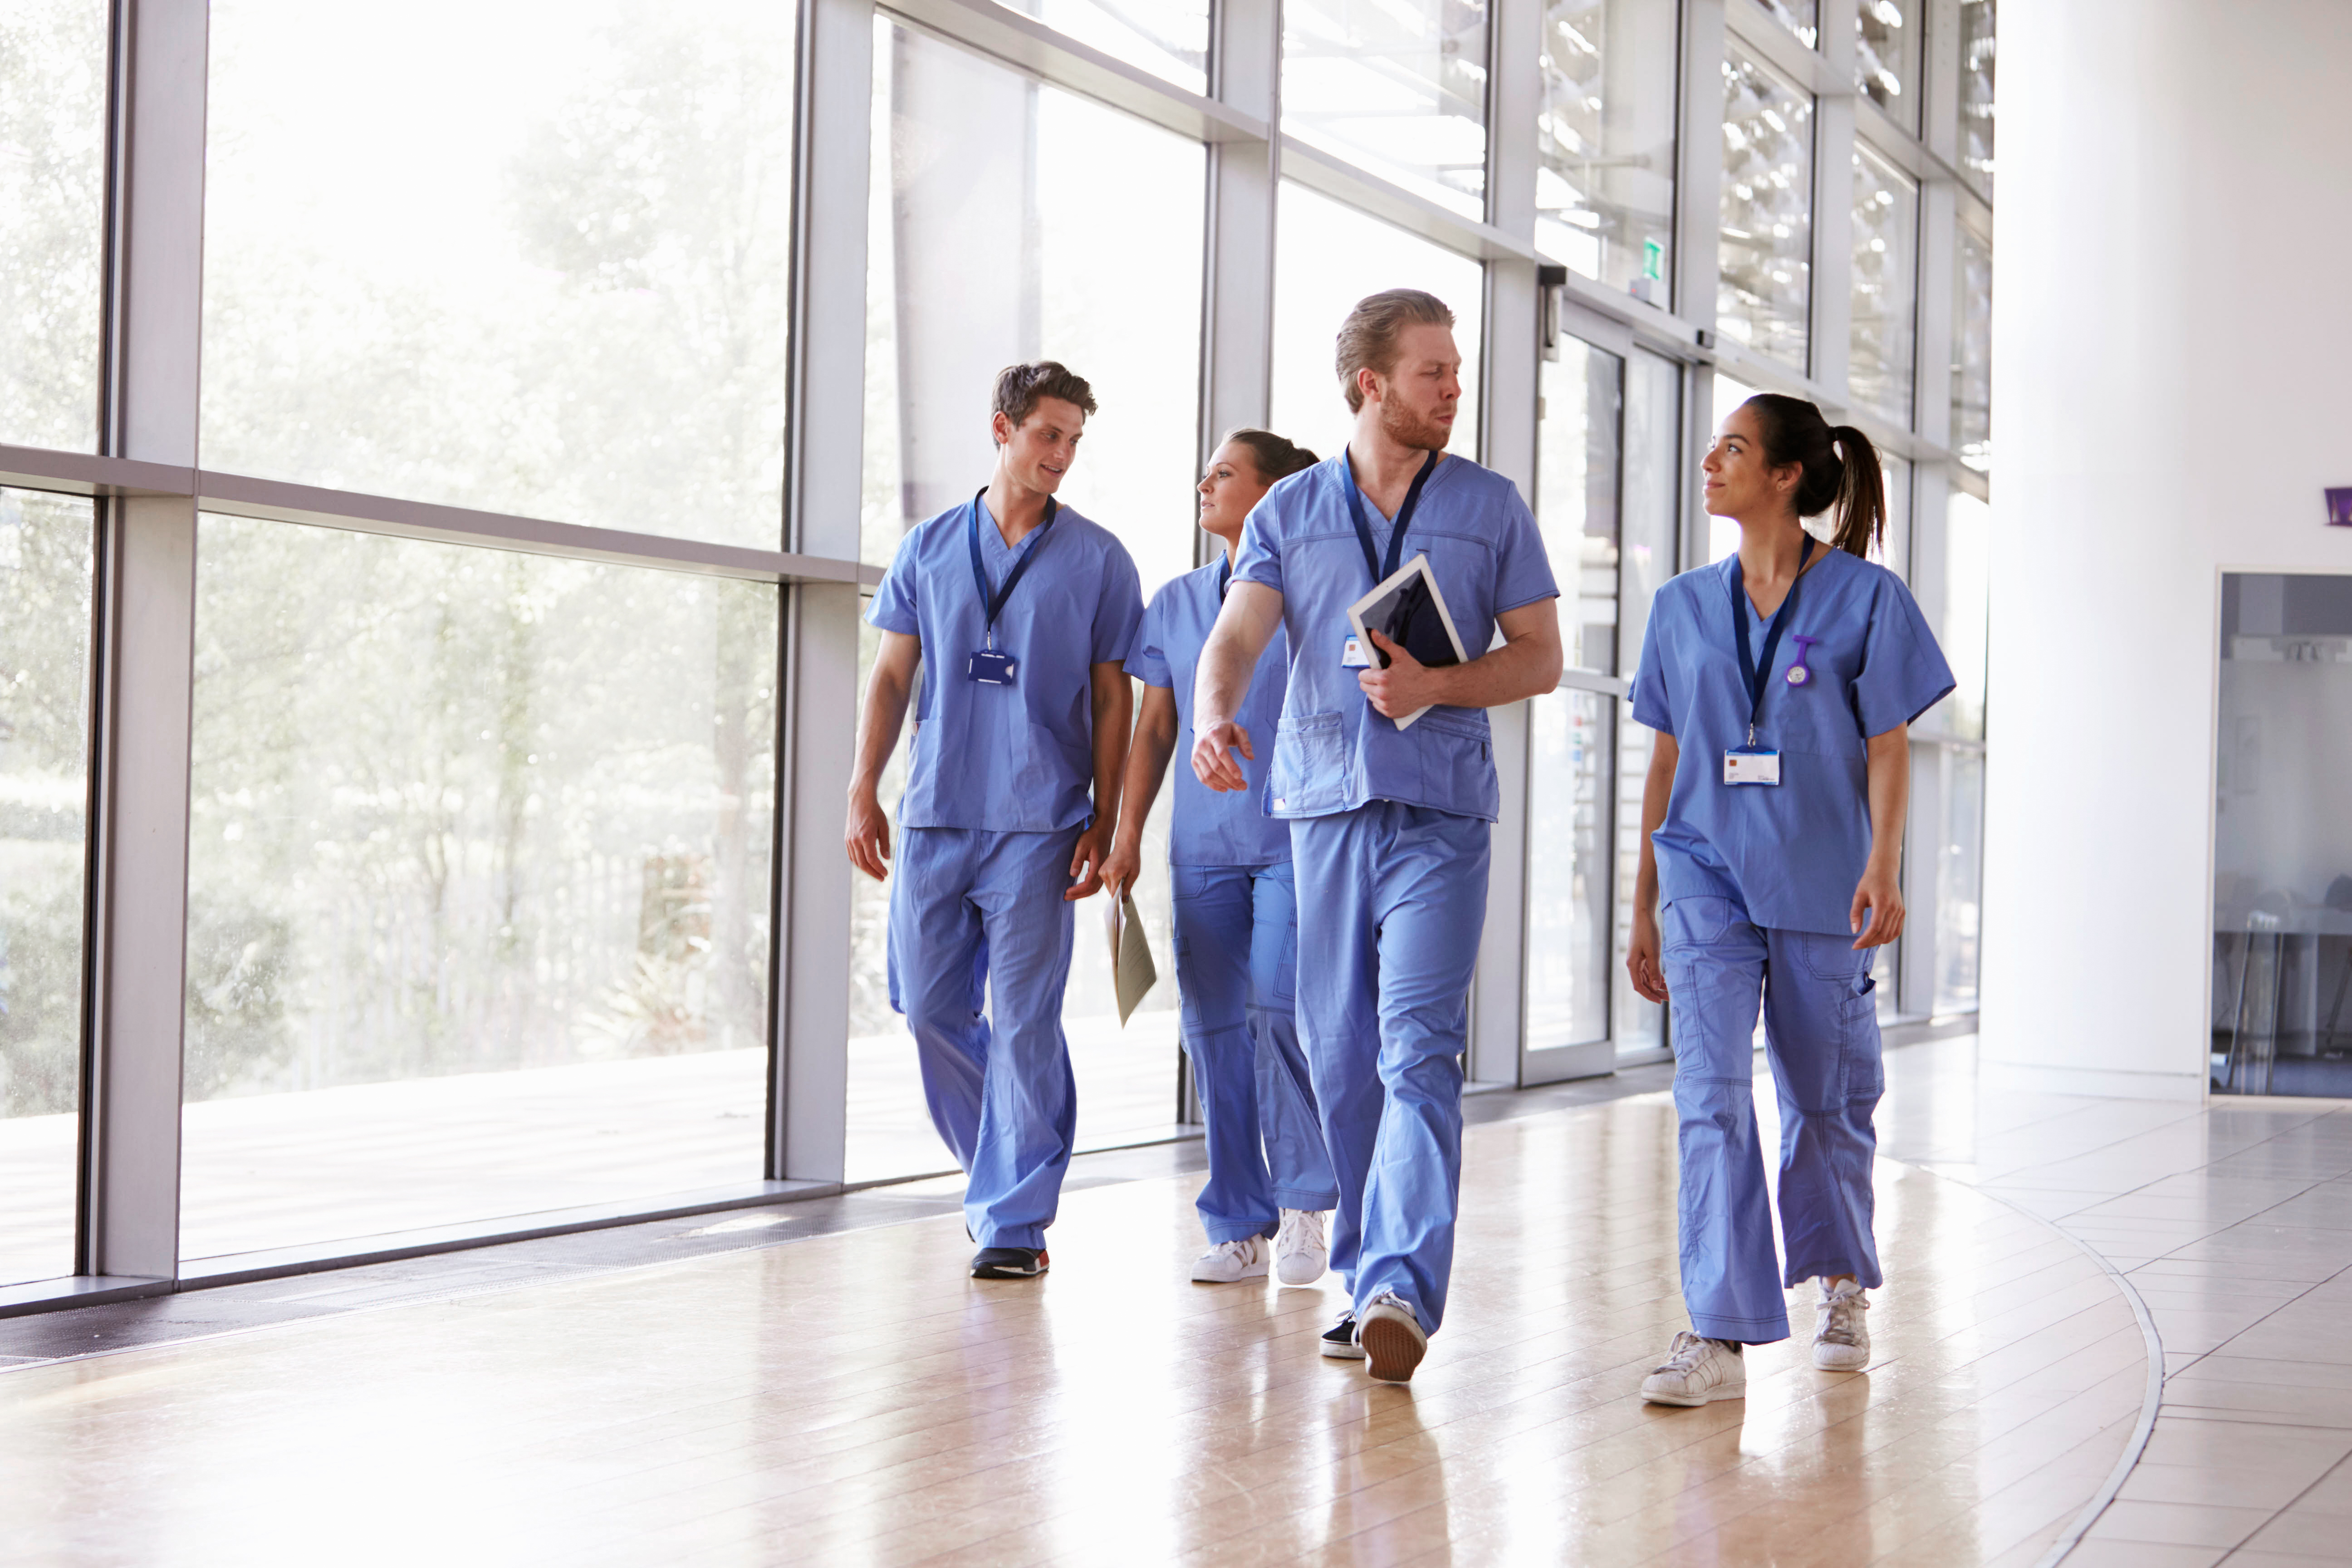 Nurses walking down a hallway, talking to each other